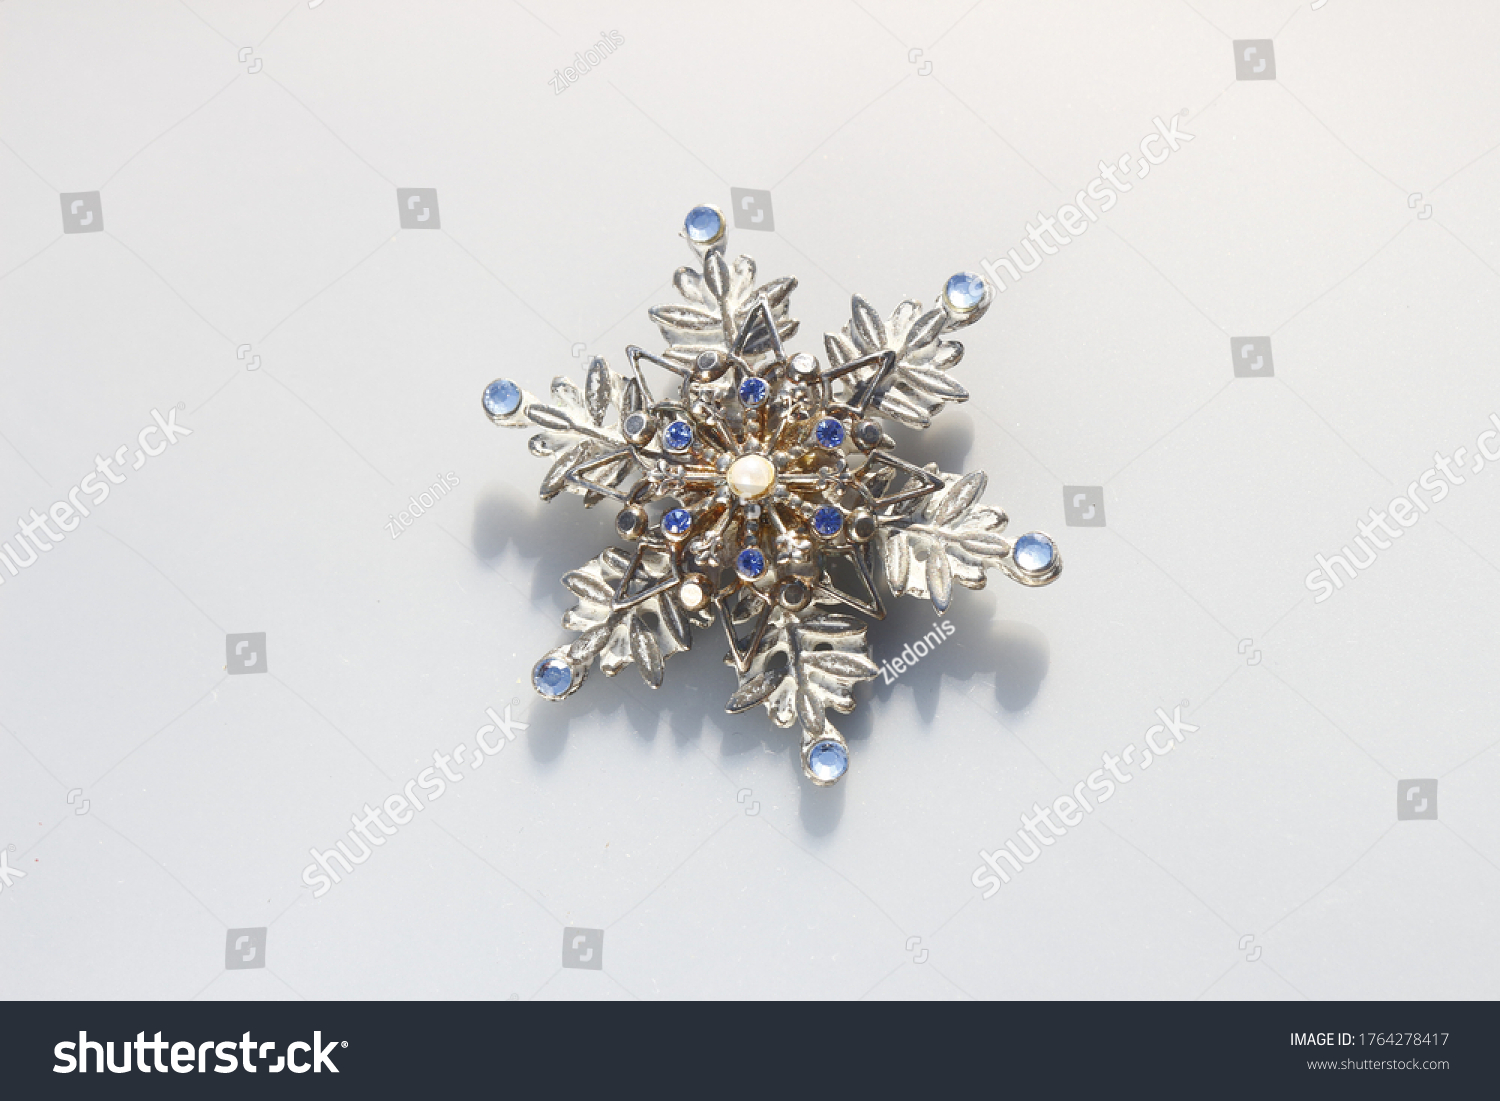 Snowflake silver tone vintage brooch with rhinestones #1764278417